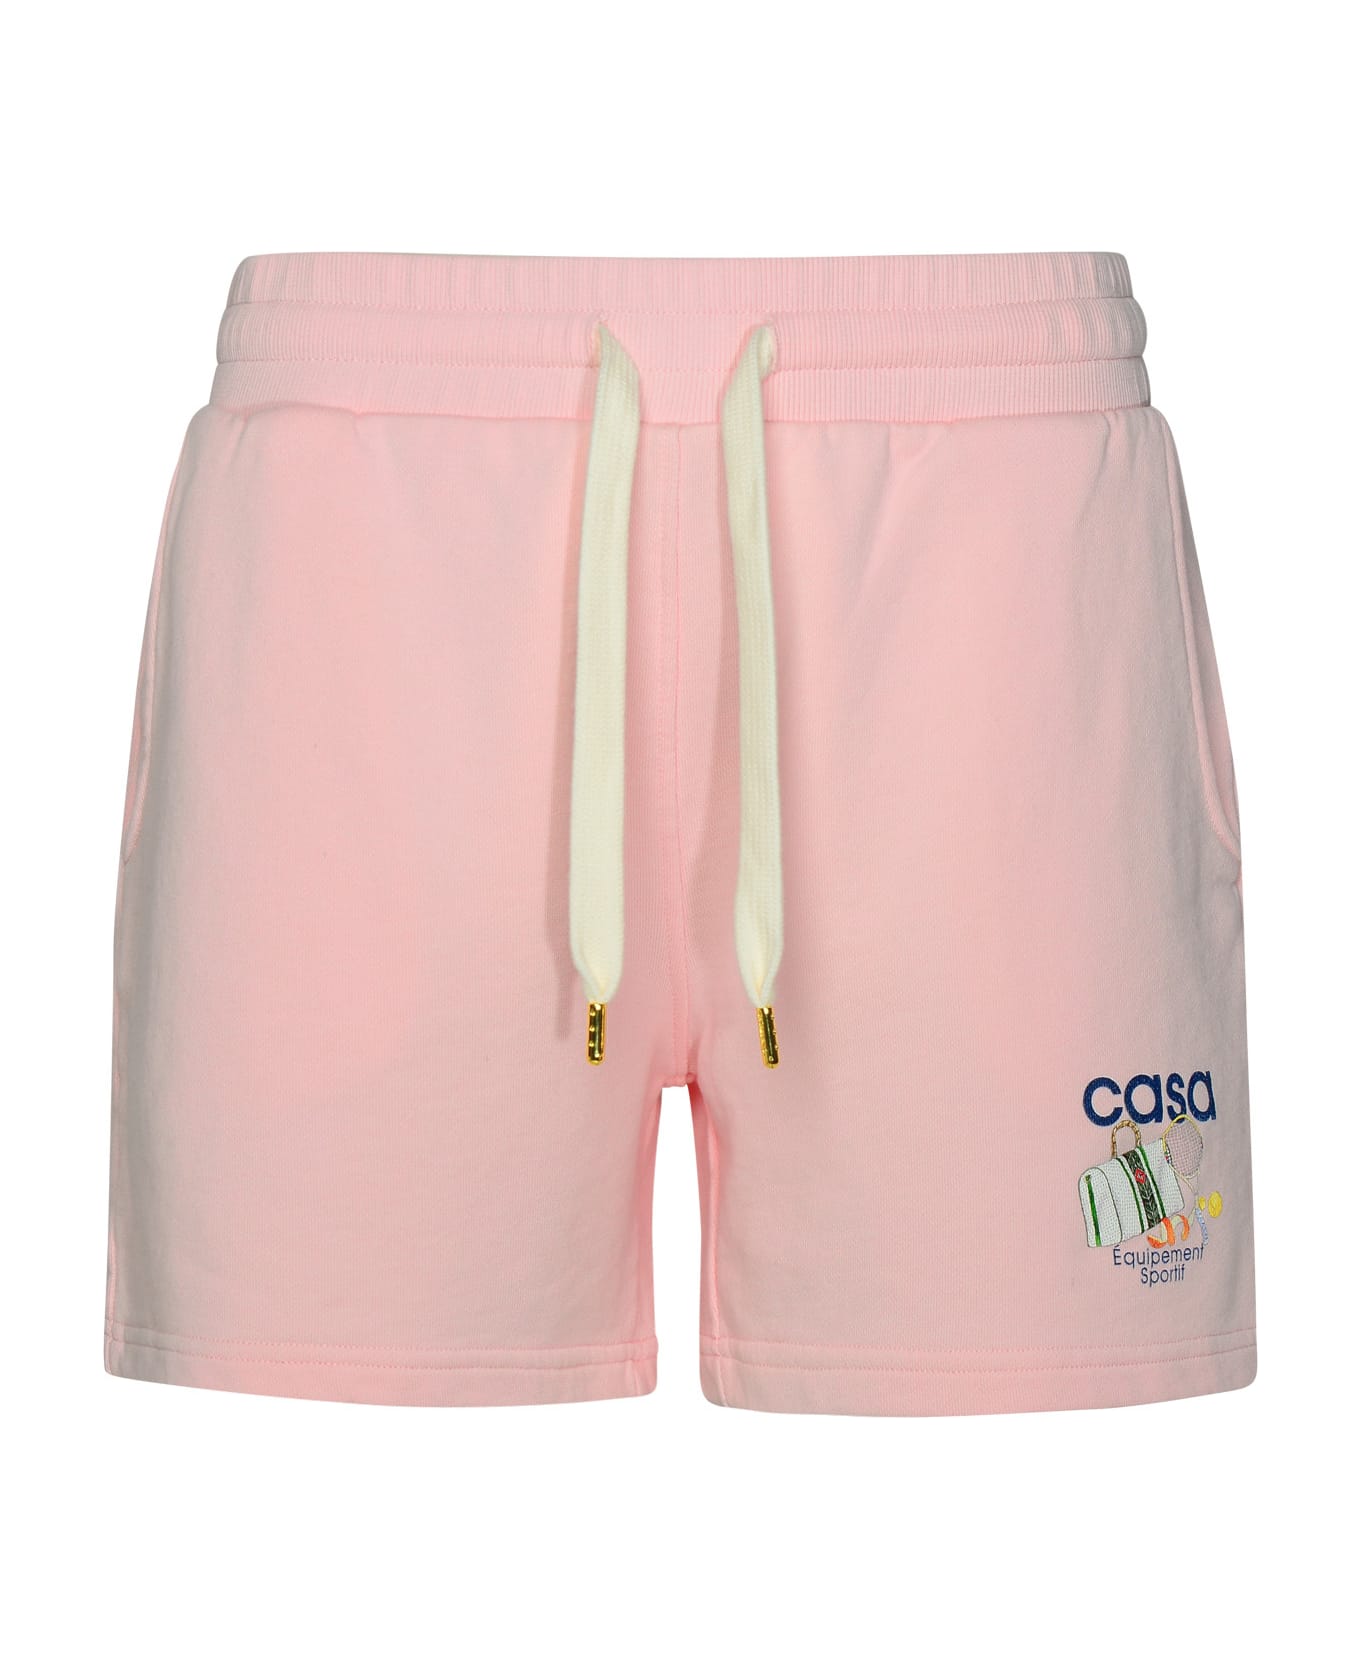 Casablanca 'equipement Sportif' Pink Organic Cotton Shorts - PINK LOOPBACK